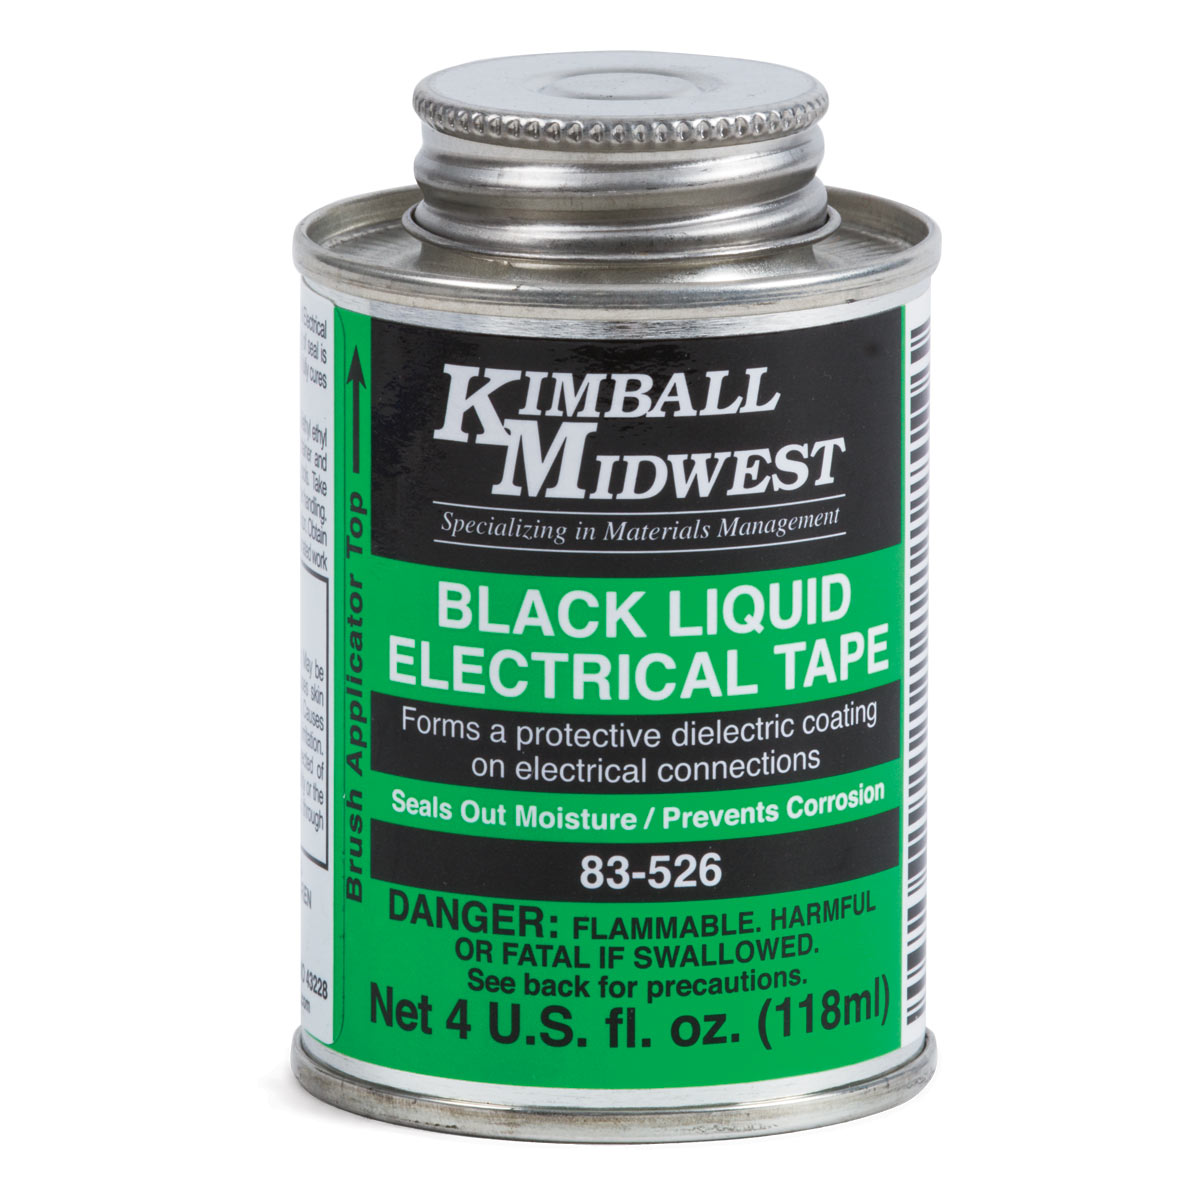 Star brite 4 oz. Liquid Electrical Tape - Black 084104N - The Home Depot